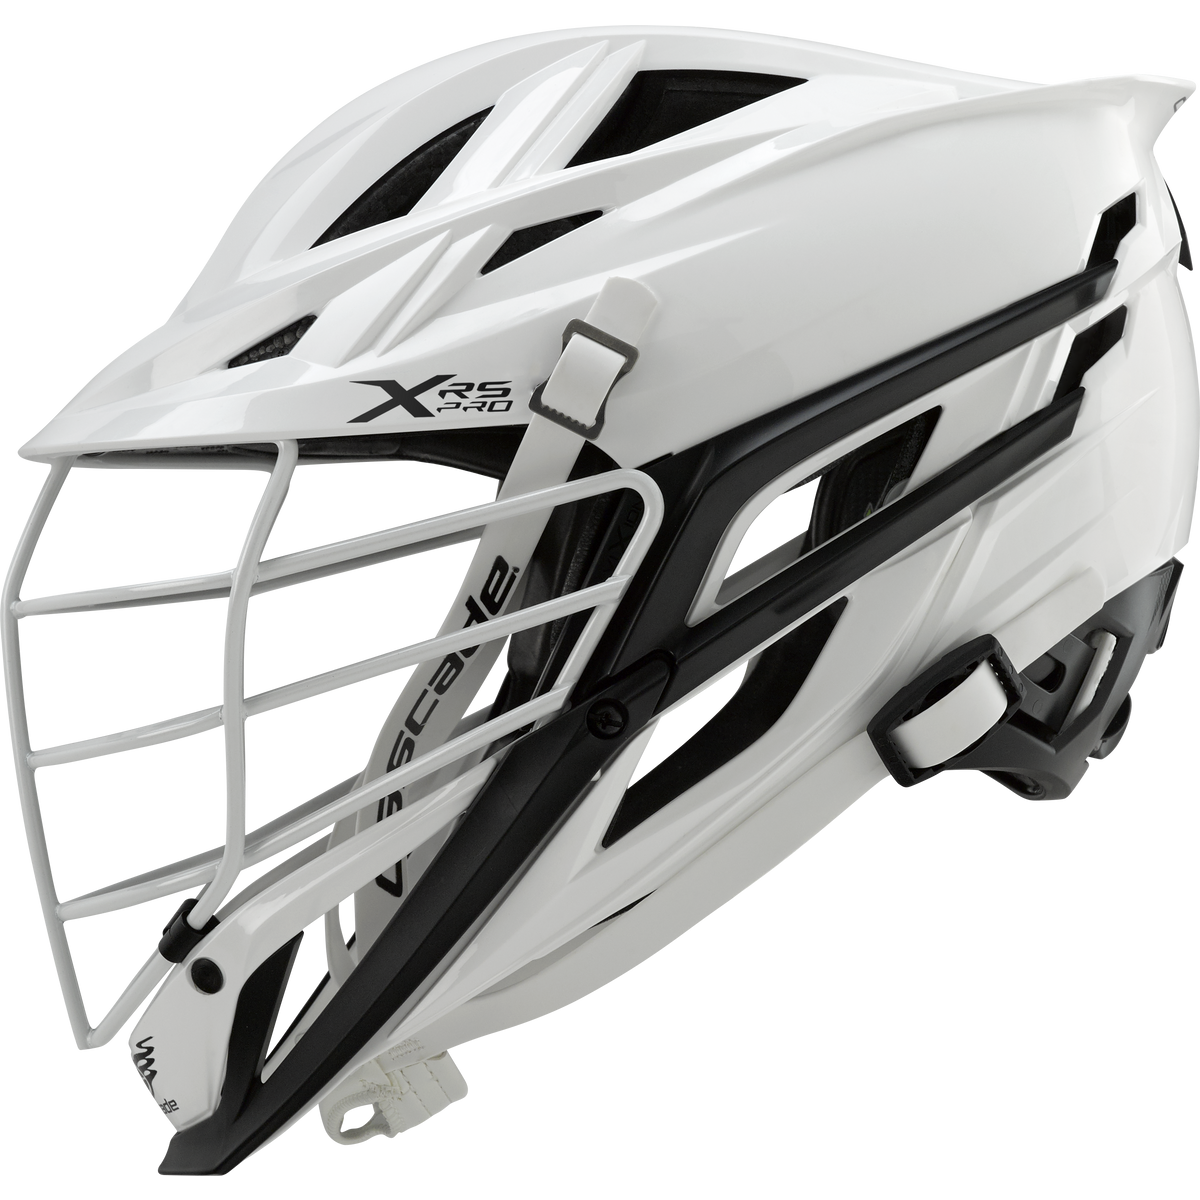 Cascade XRS Pro Lacrosse Helmet - Custom Design